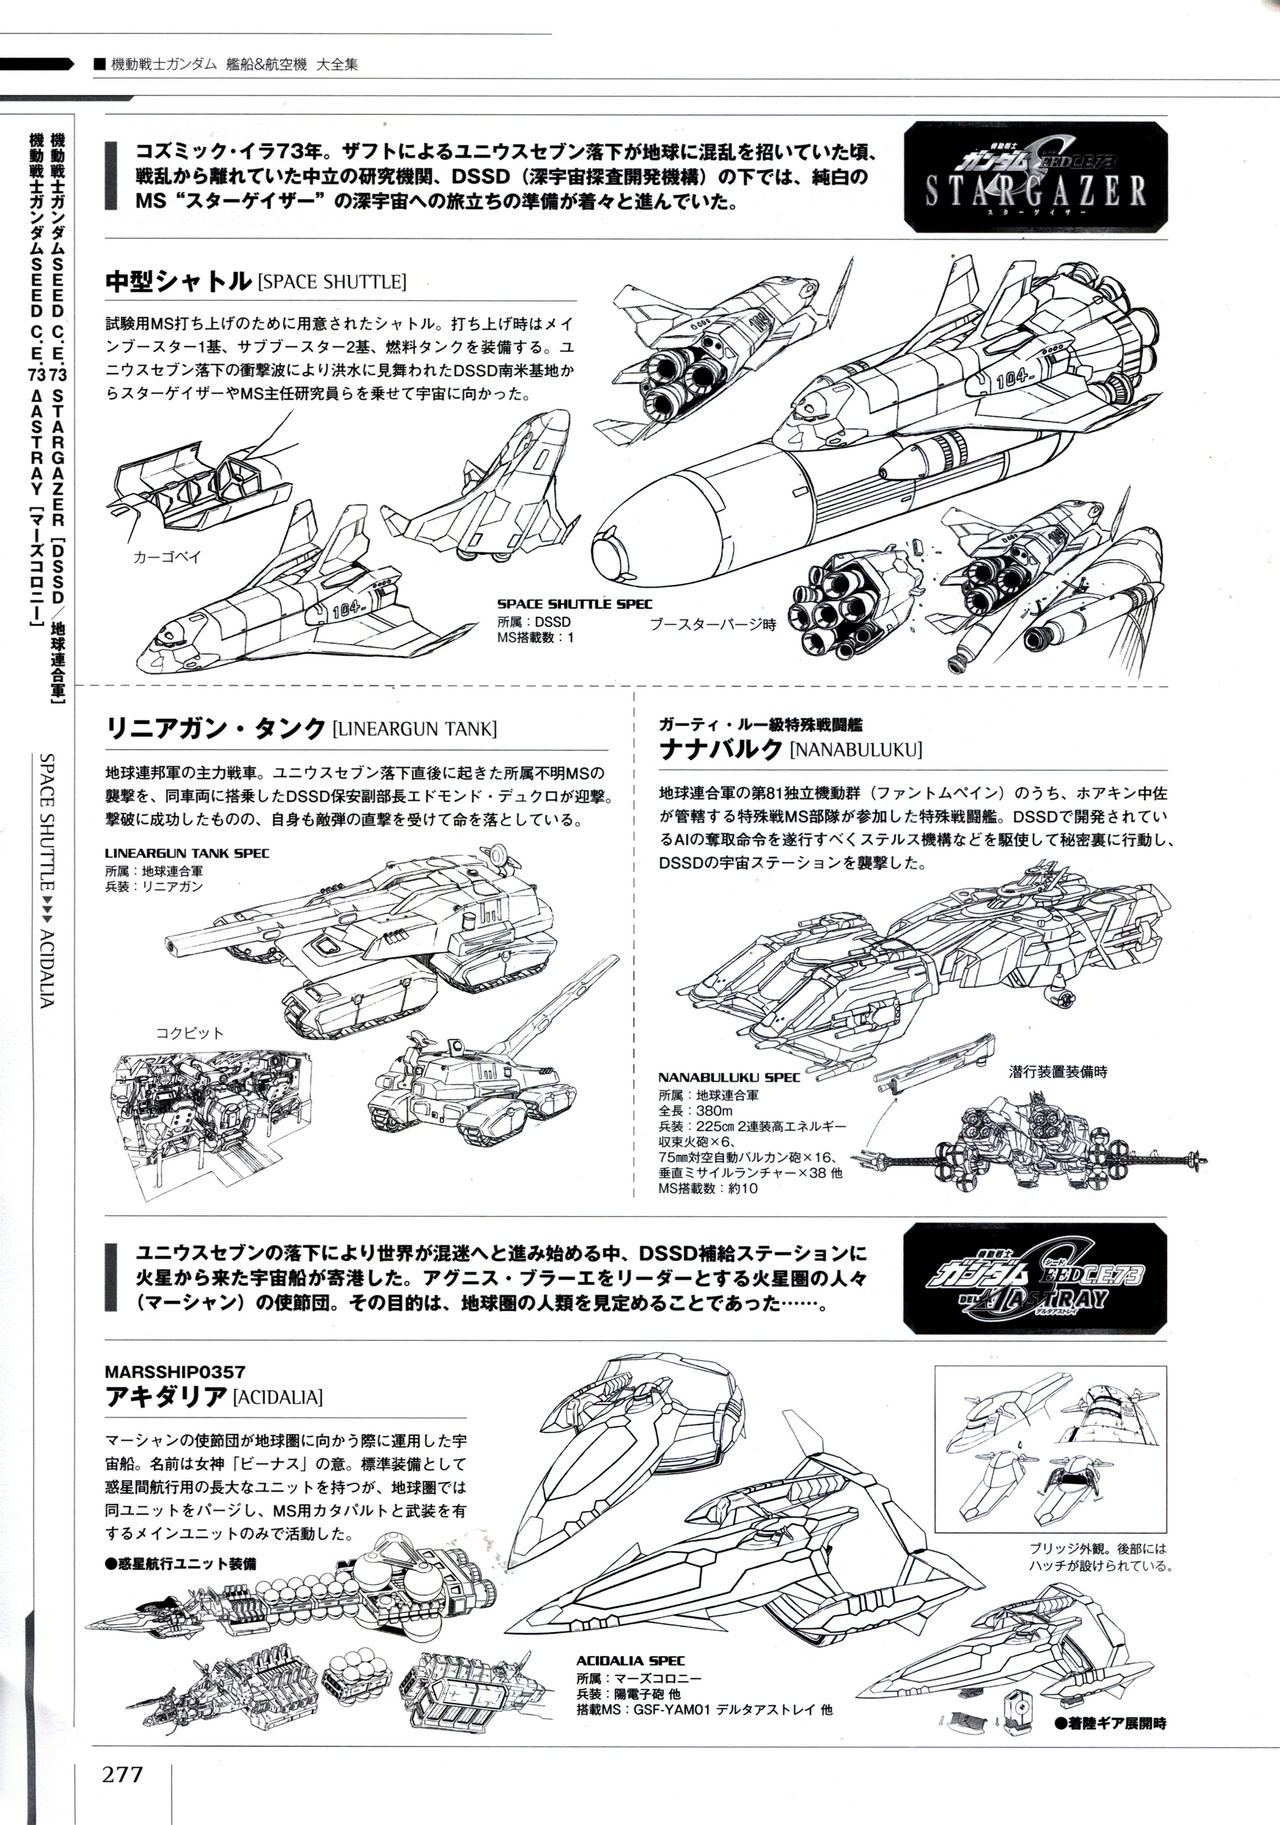 Mobile Suit Gundam - Ship & Aerospace Plane Encyclopedia - Revised Edition 282